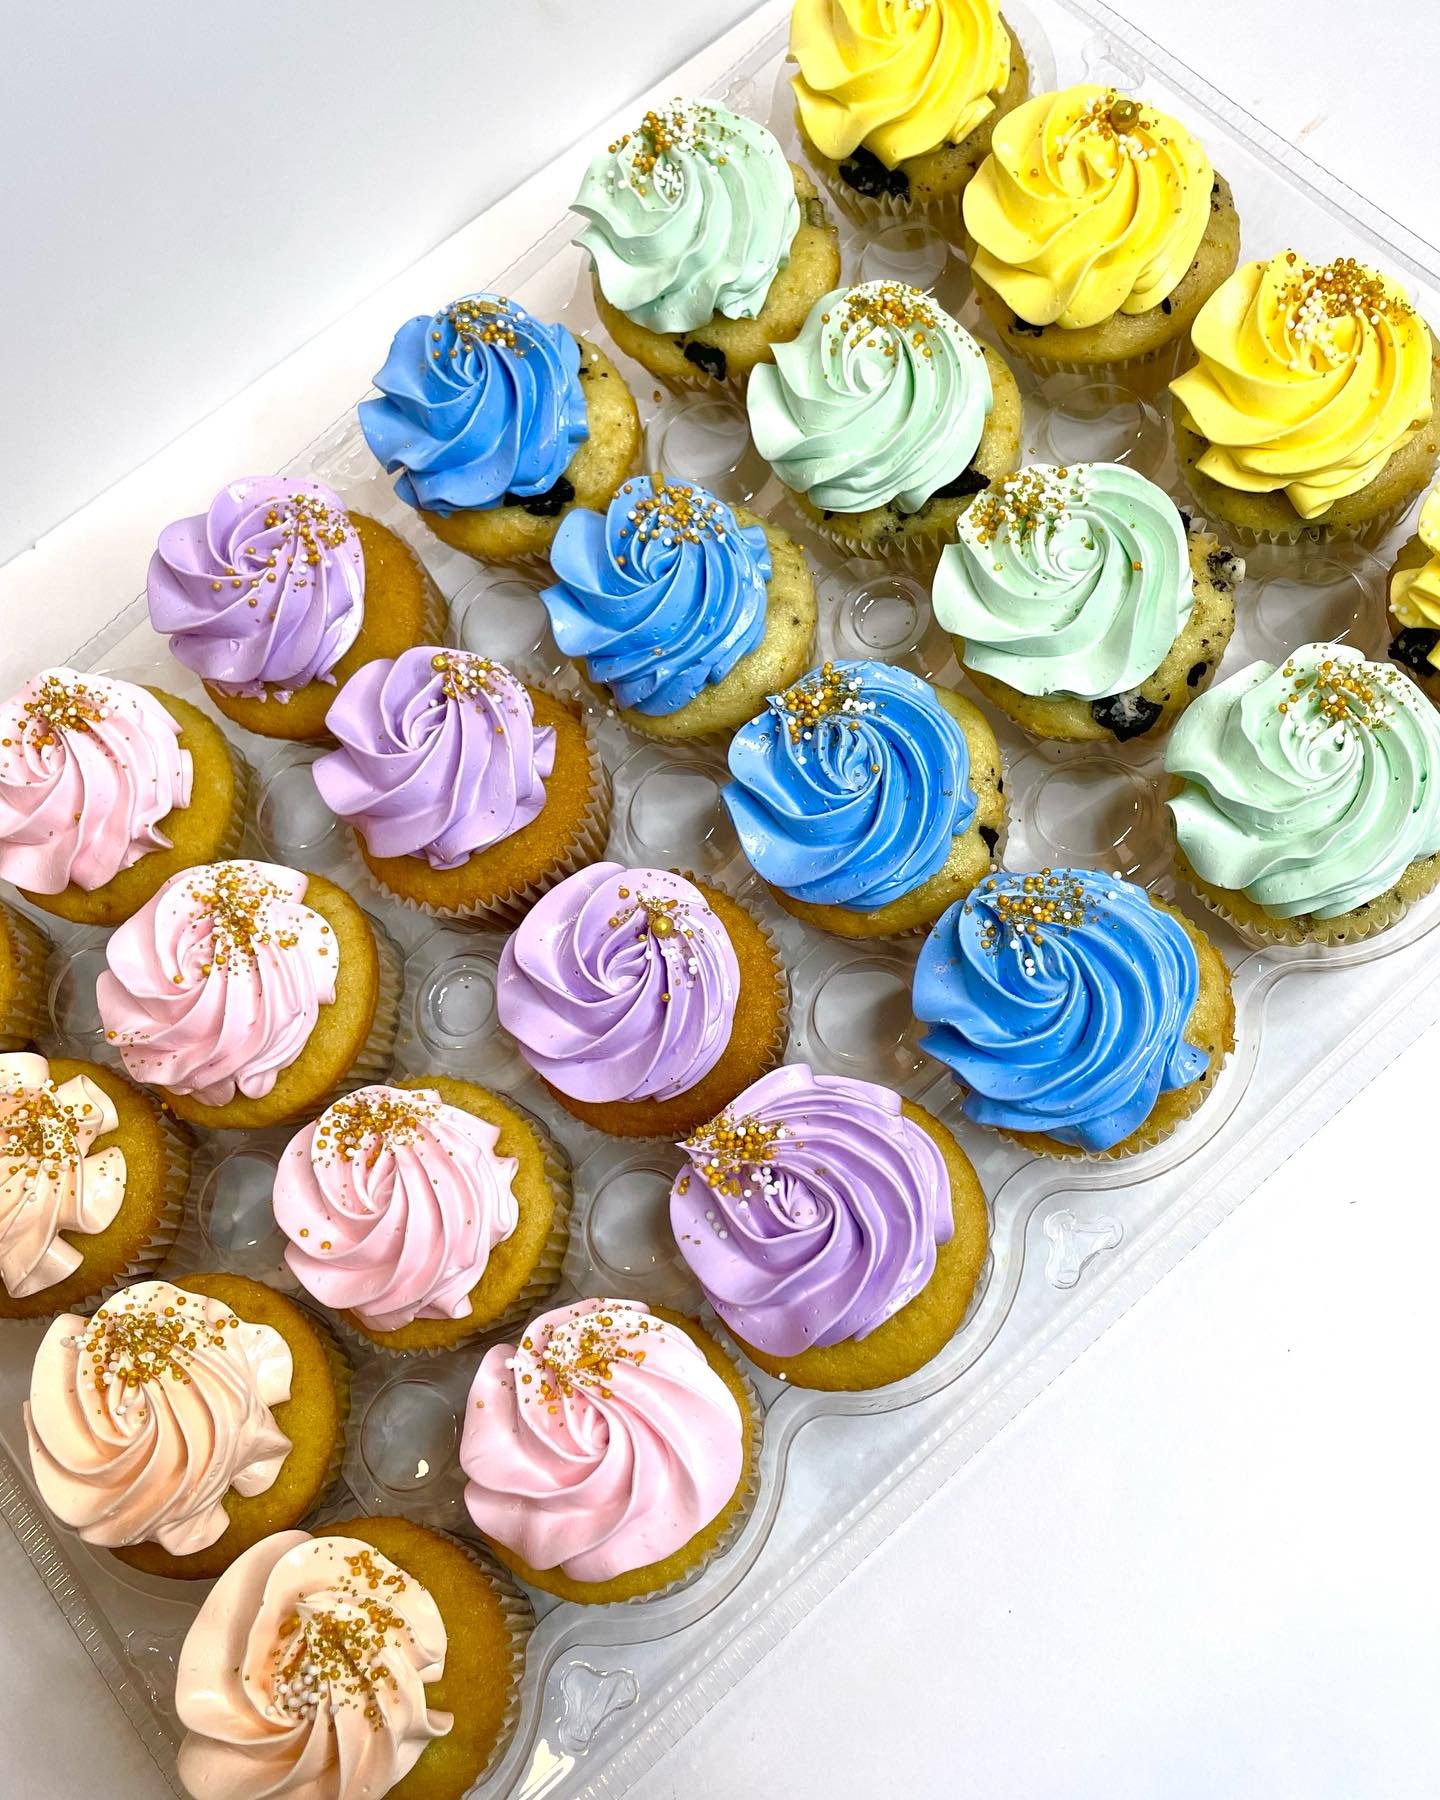 Rainbow colored cupcakes ❤️🧡💛💚💙💜

#rainbowcupcakes #delishcupcakes #mamaramsaysdesserts #mamaramsay #whenyoucalljustaskformama #colorfulcupcakes #Moderncake #customcakesatlanta #thebakefeed #bakestagram #bakinggoals #instayum #girlcakes #iloveba